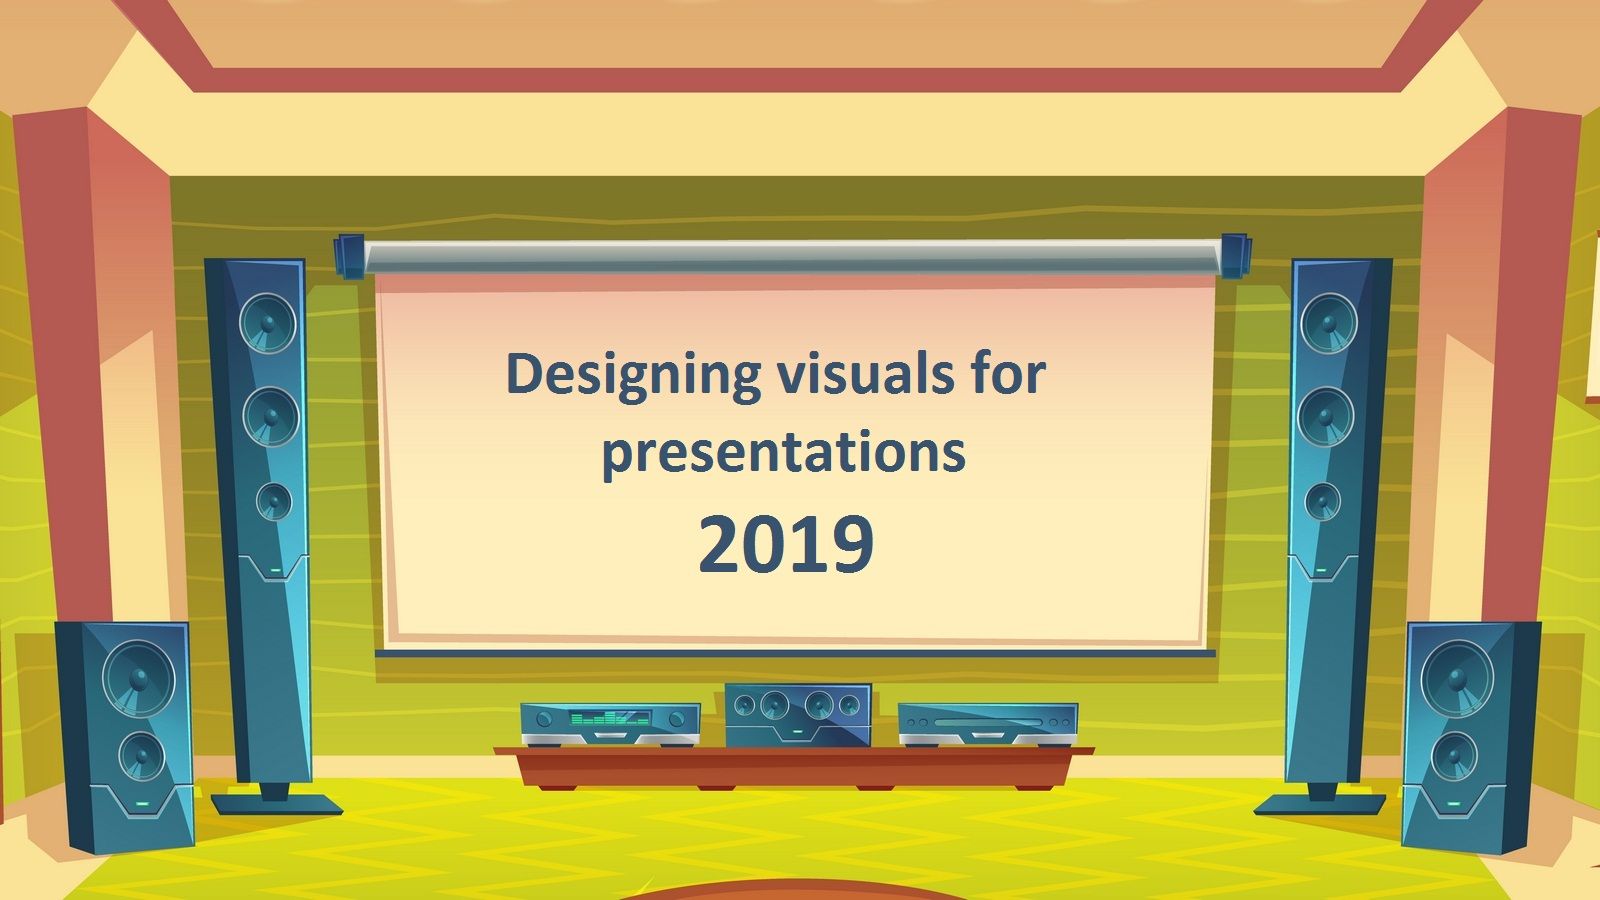 Designing visuals for presentations 2019